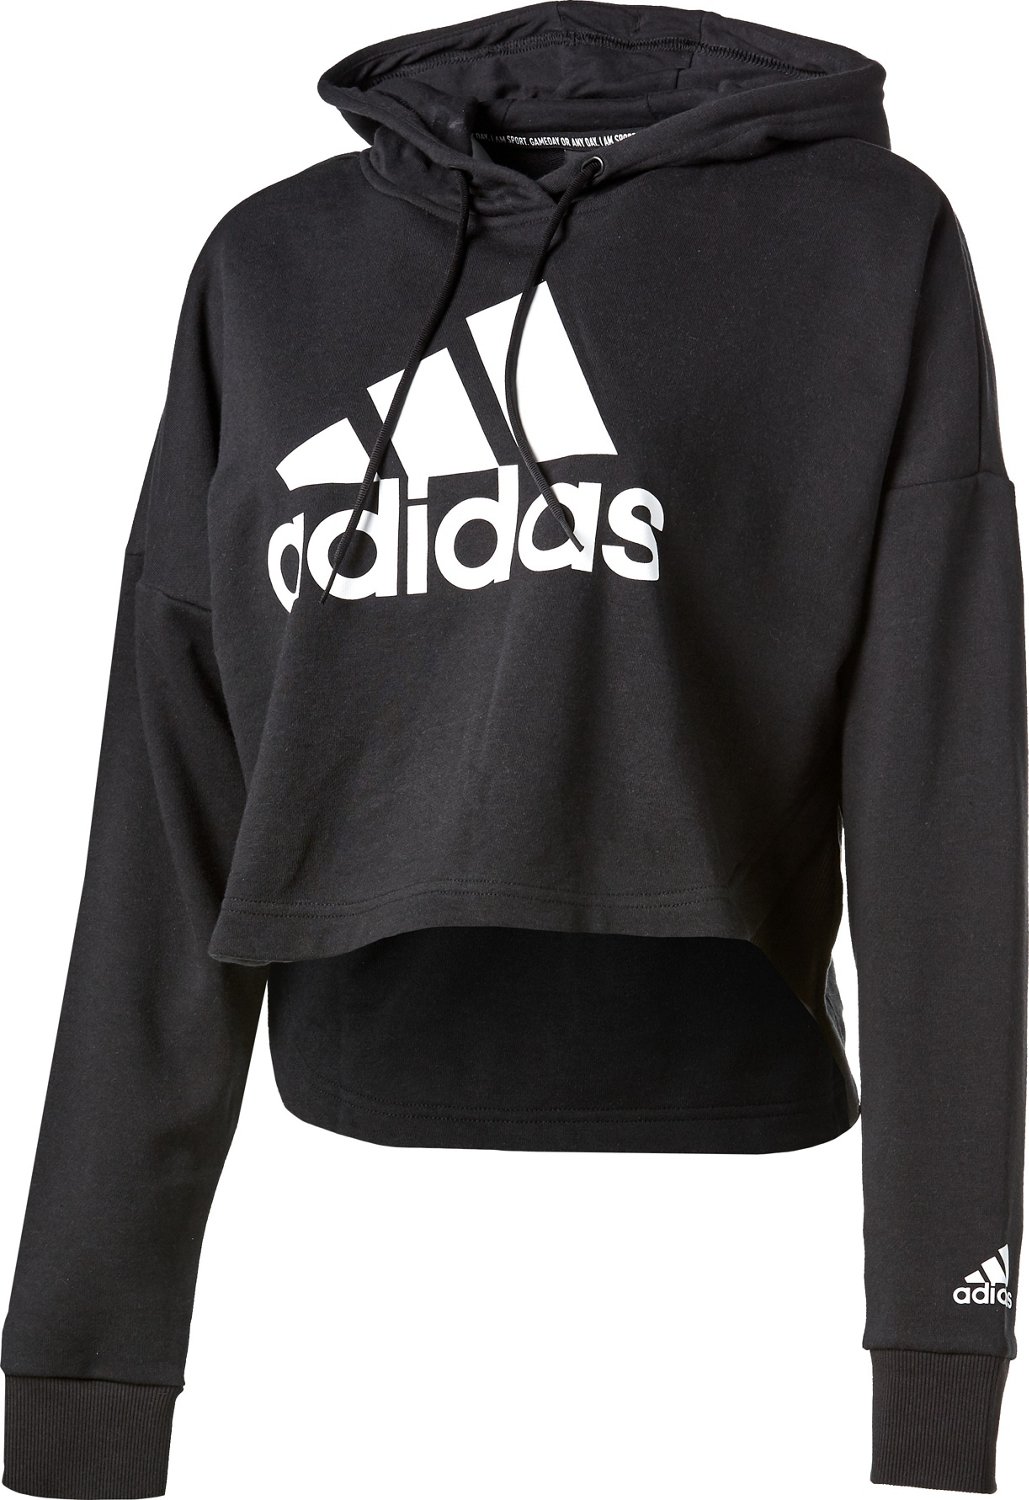 adidas hoodie academy